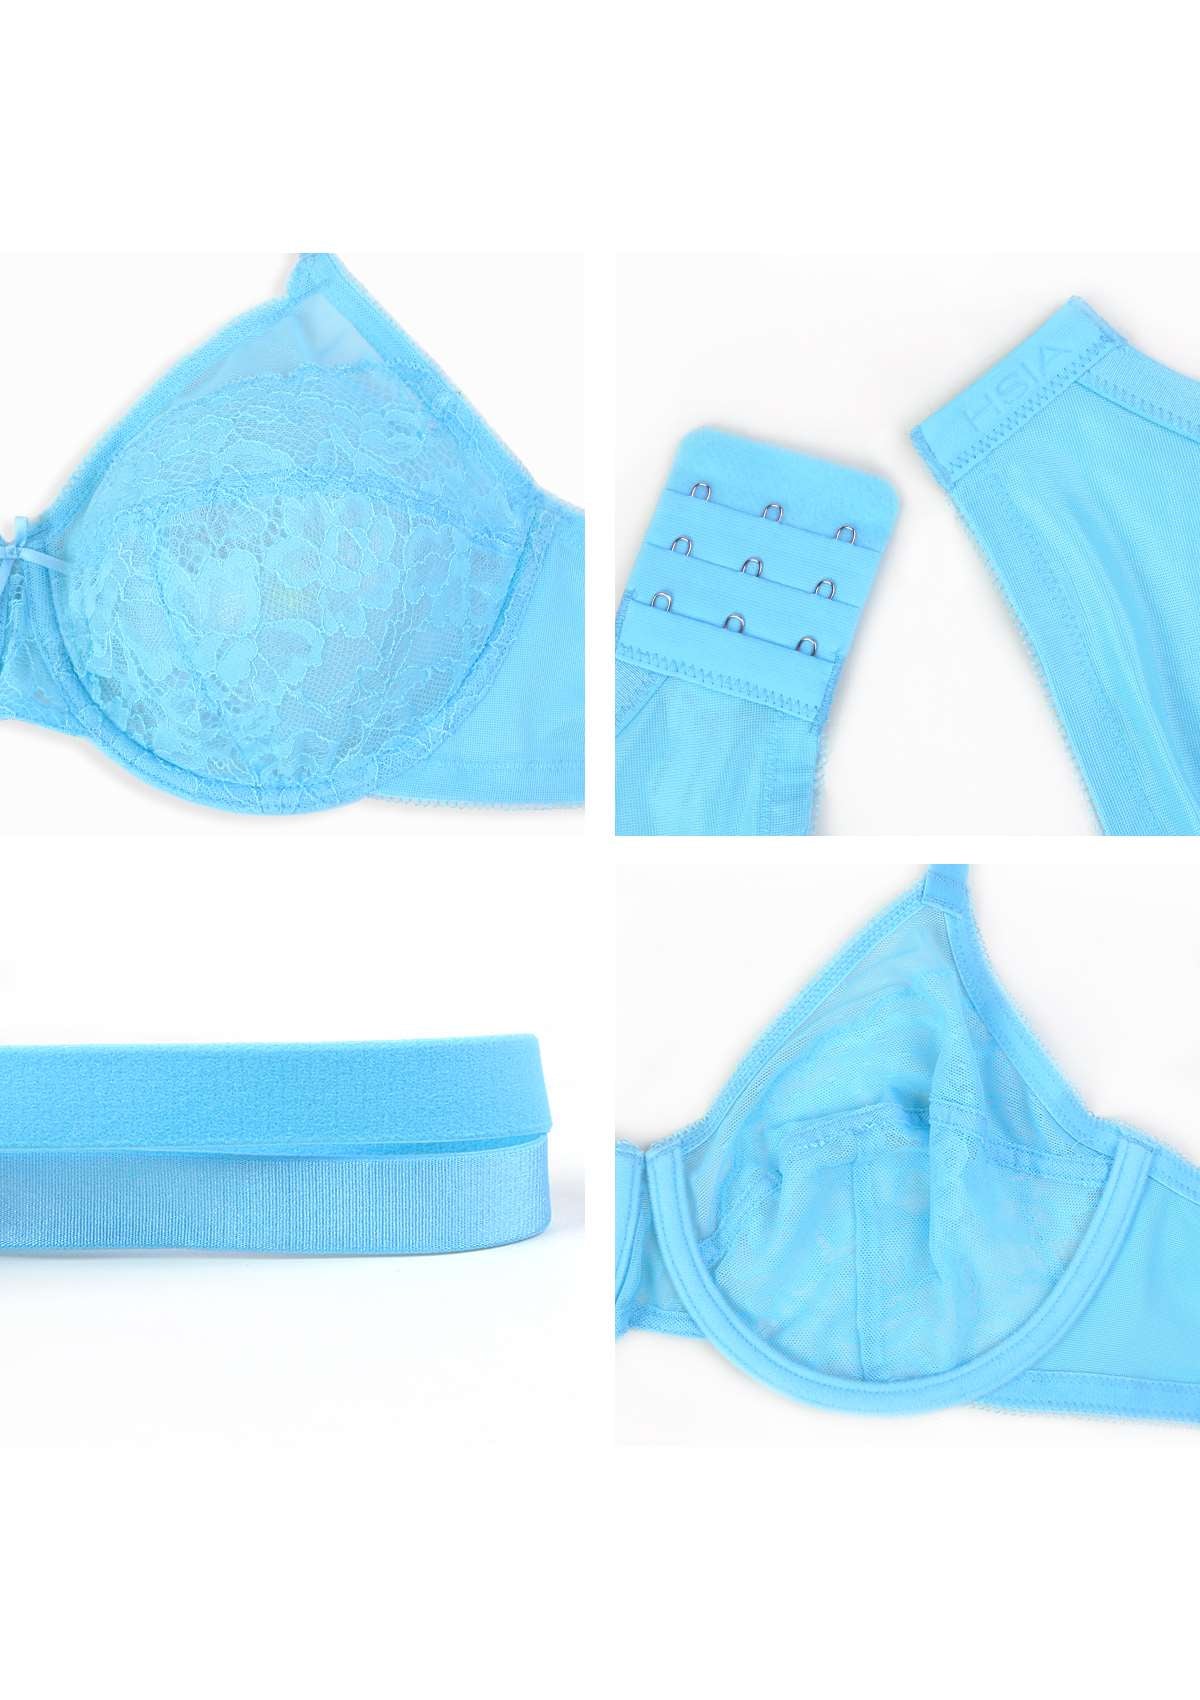 HSIA Enchante Minimizer Lace Bra: Full Support For Heavy Breasts - Capri Blue / 36 / H